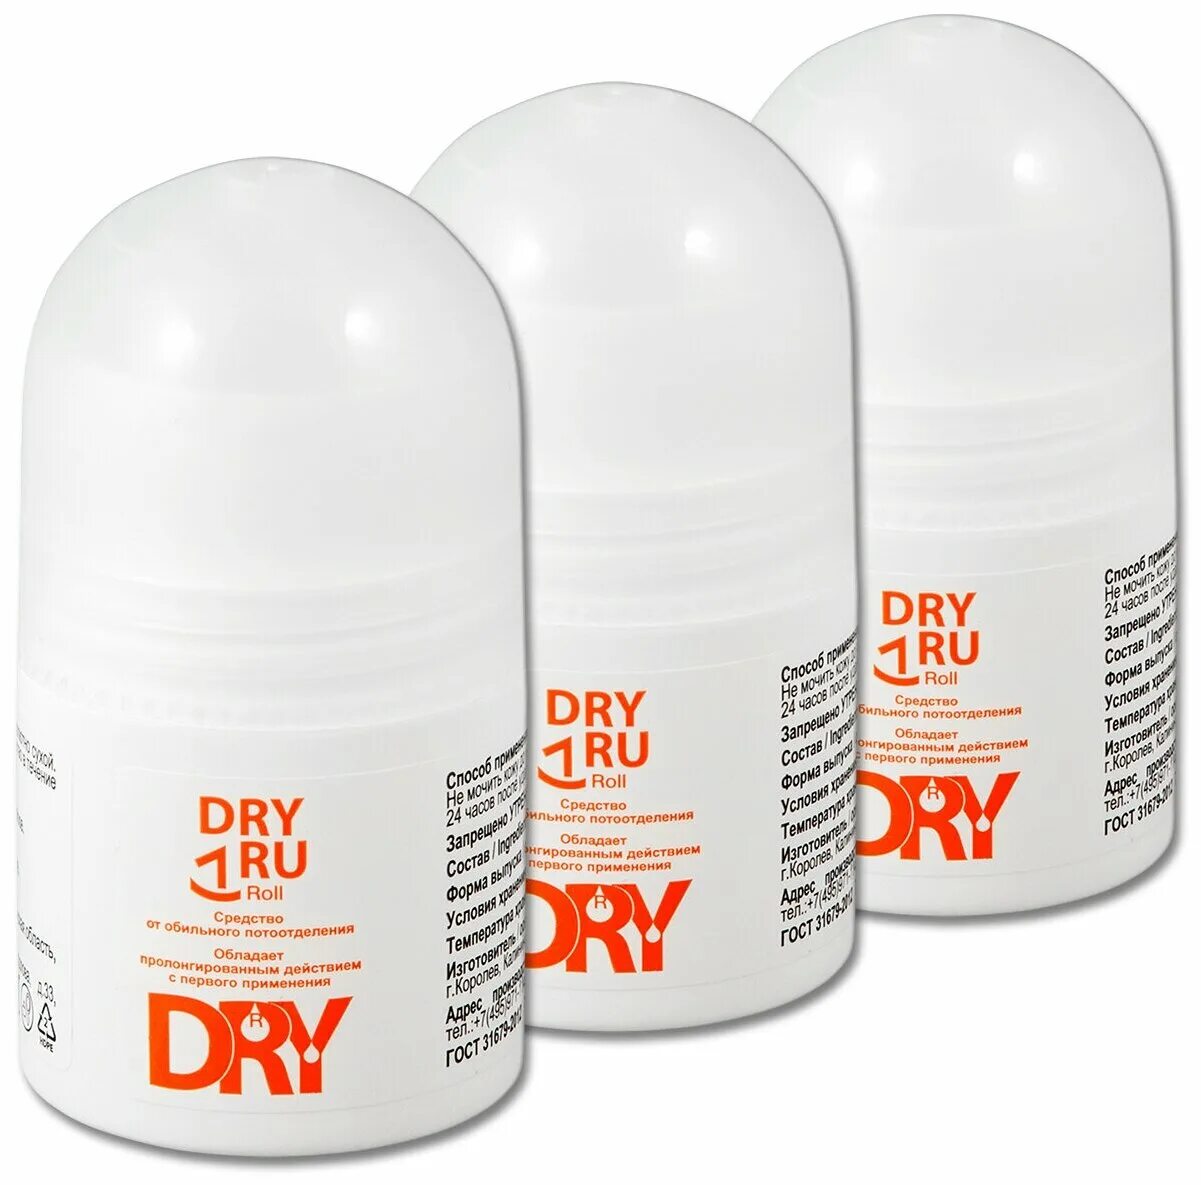 Антиперспирант DRYRU Roll 50мл. Драйру Roll дезодорант роликовый фл 50 мл х1. Dry Dry дезодорант для подмышек. Dry антиперспирант 30% и 20%. Dry ru отзывы